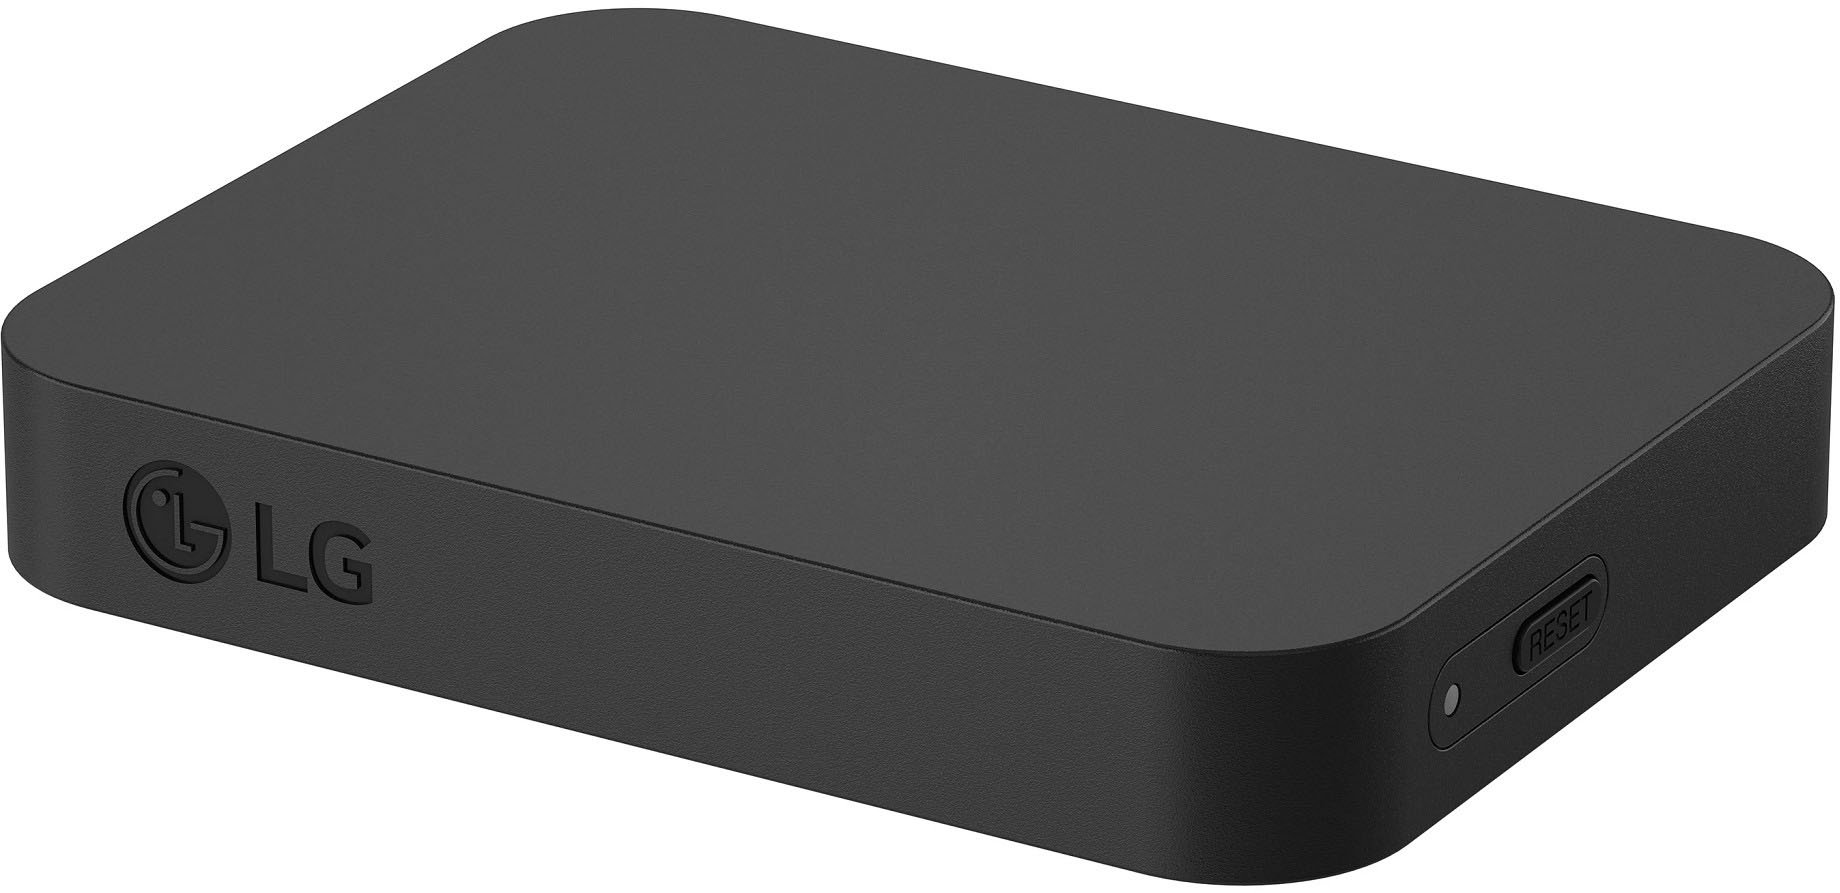 Angle View: WOWCAST Wireless Audio Transmitter for TV and LG Soundbar - Black